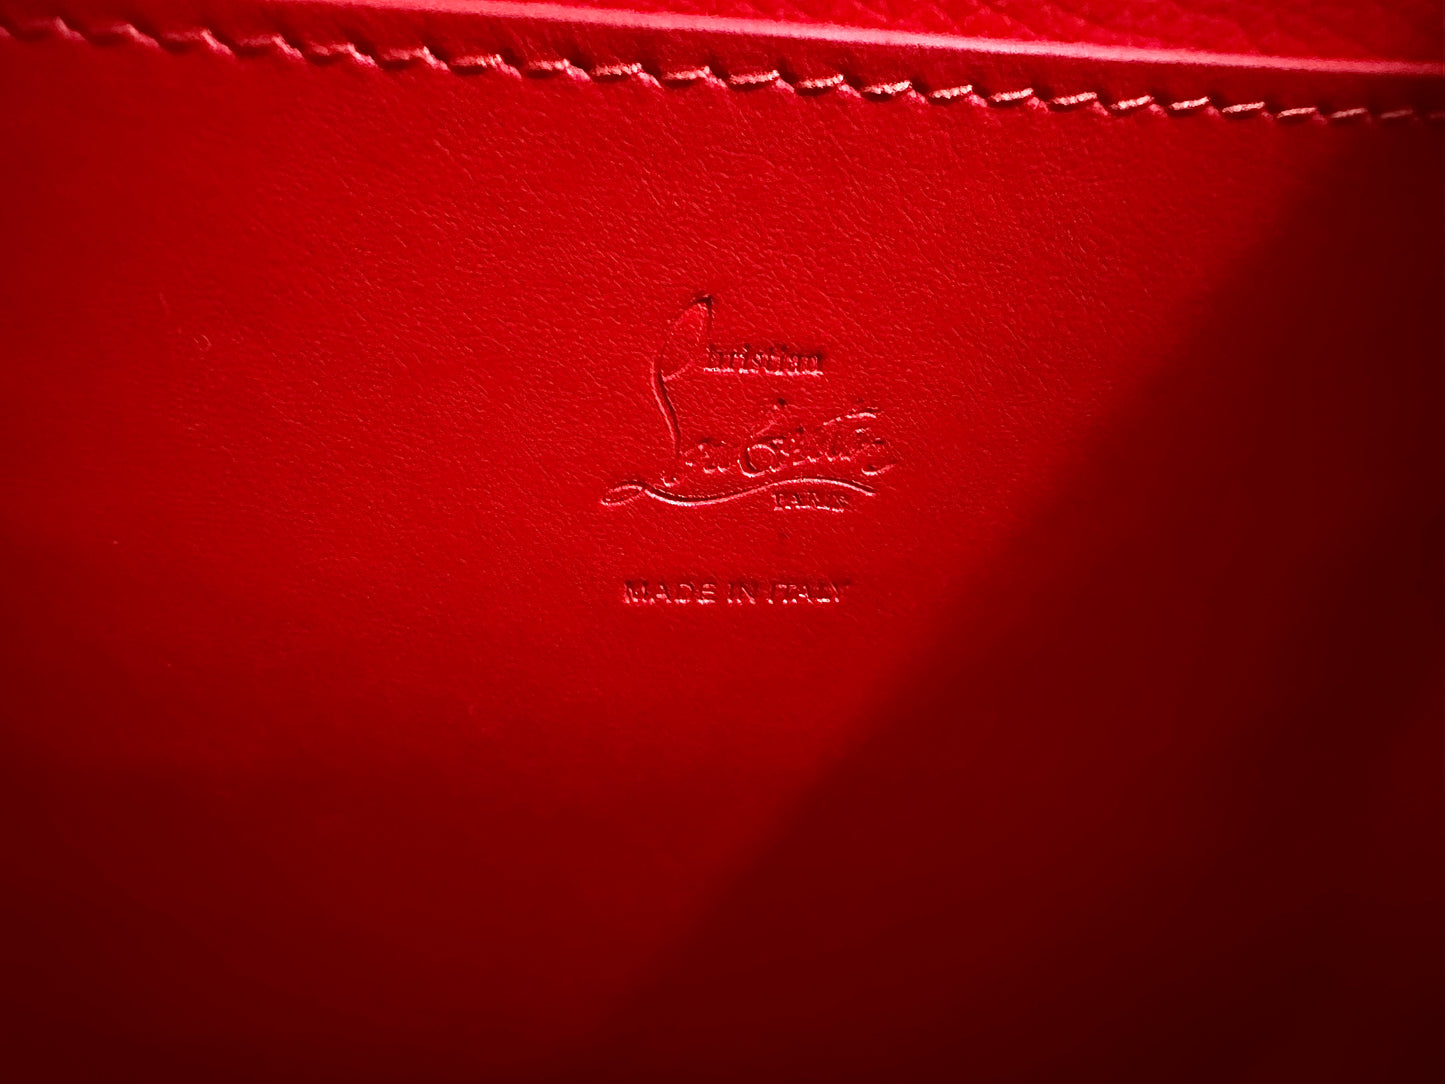 Christian Louboutin stamp inside purse.